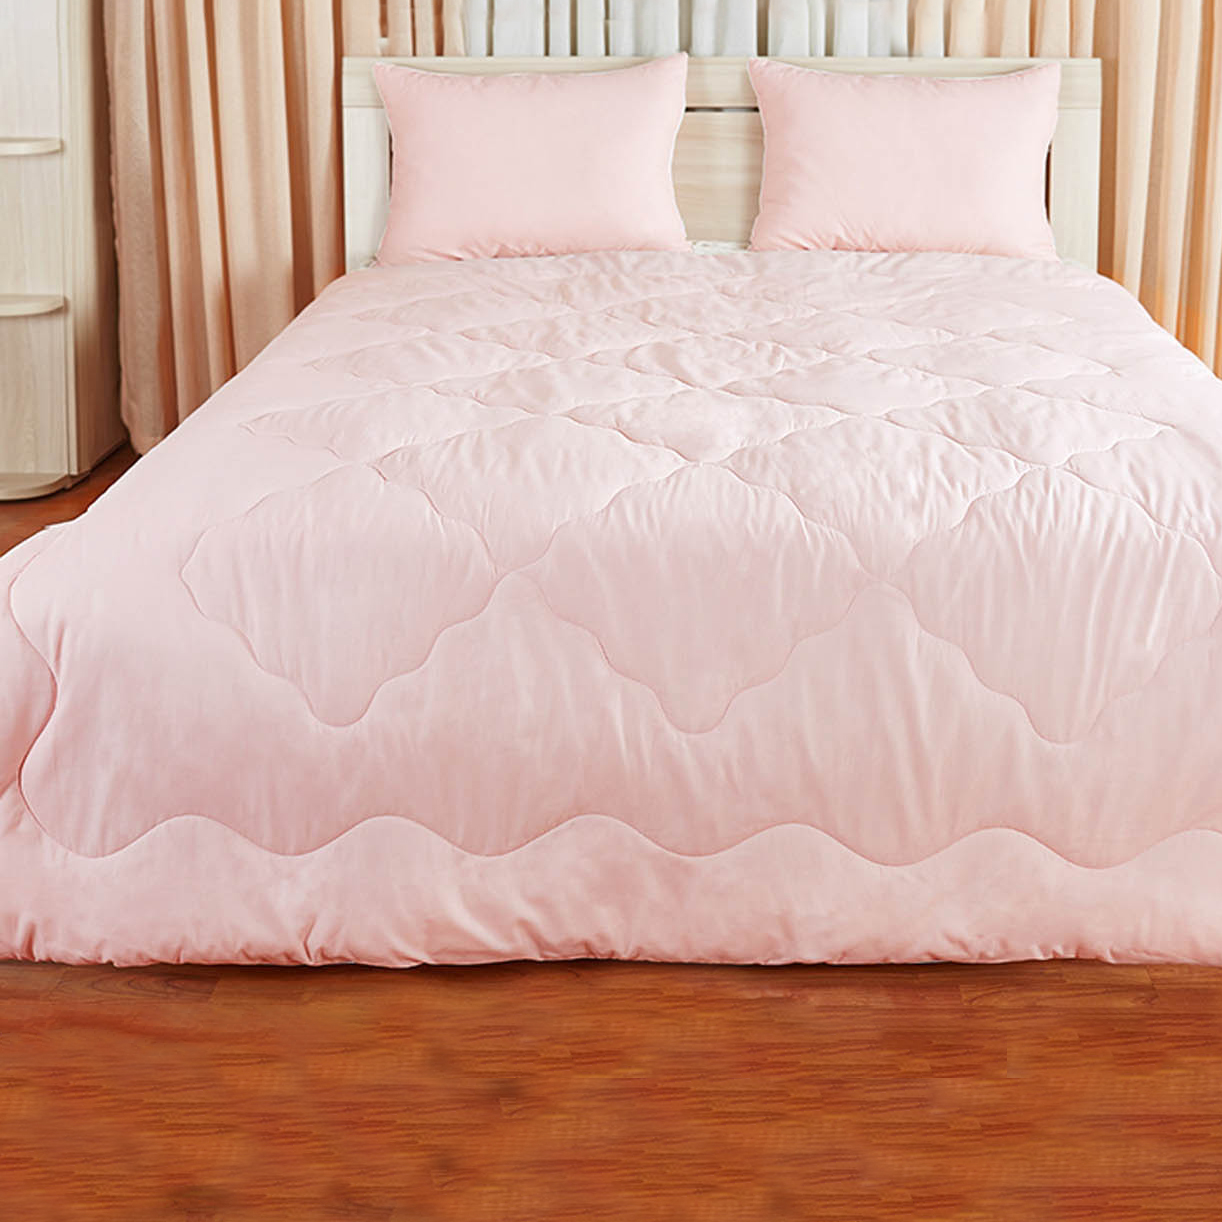 Одеяло Cali Цвет: Розовый (140х205 см), размер 140х205 см pve319198 Одеяло Cali Цвет: Розовый (140х205 см) - фото 1